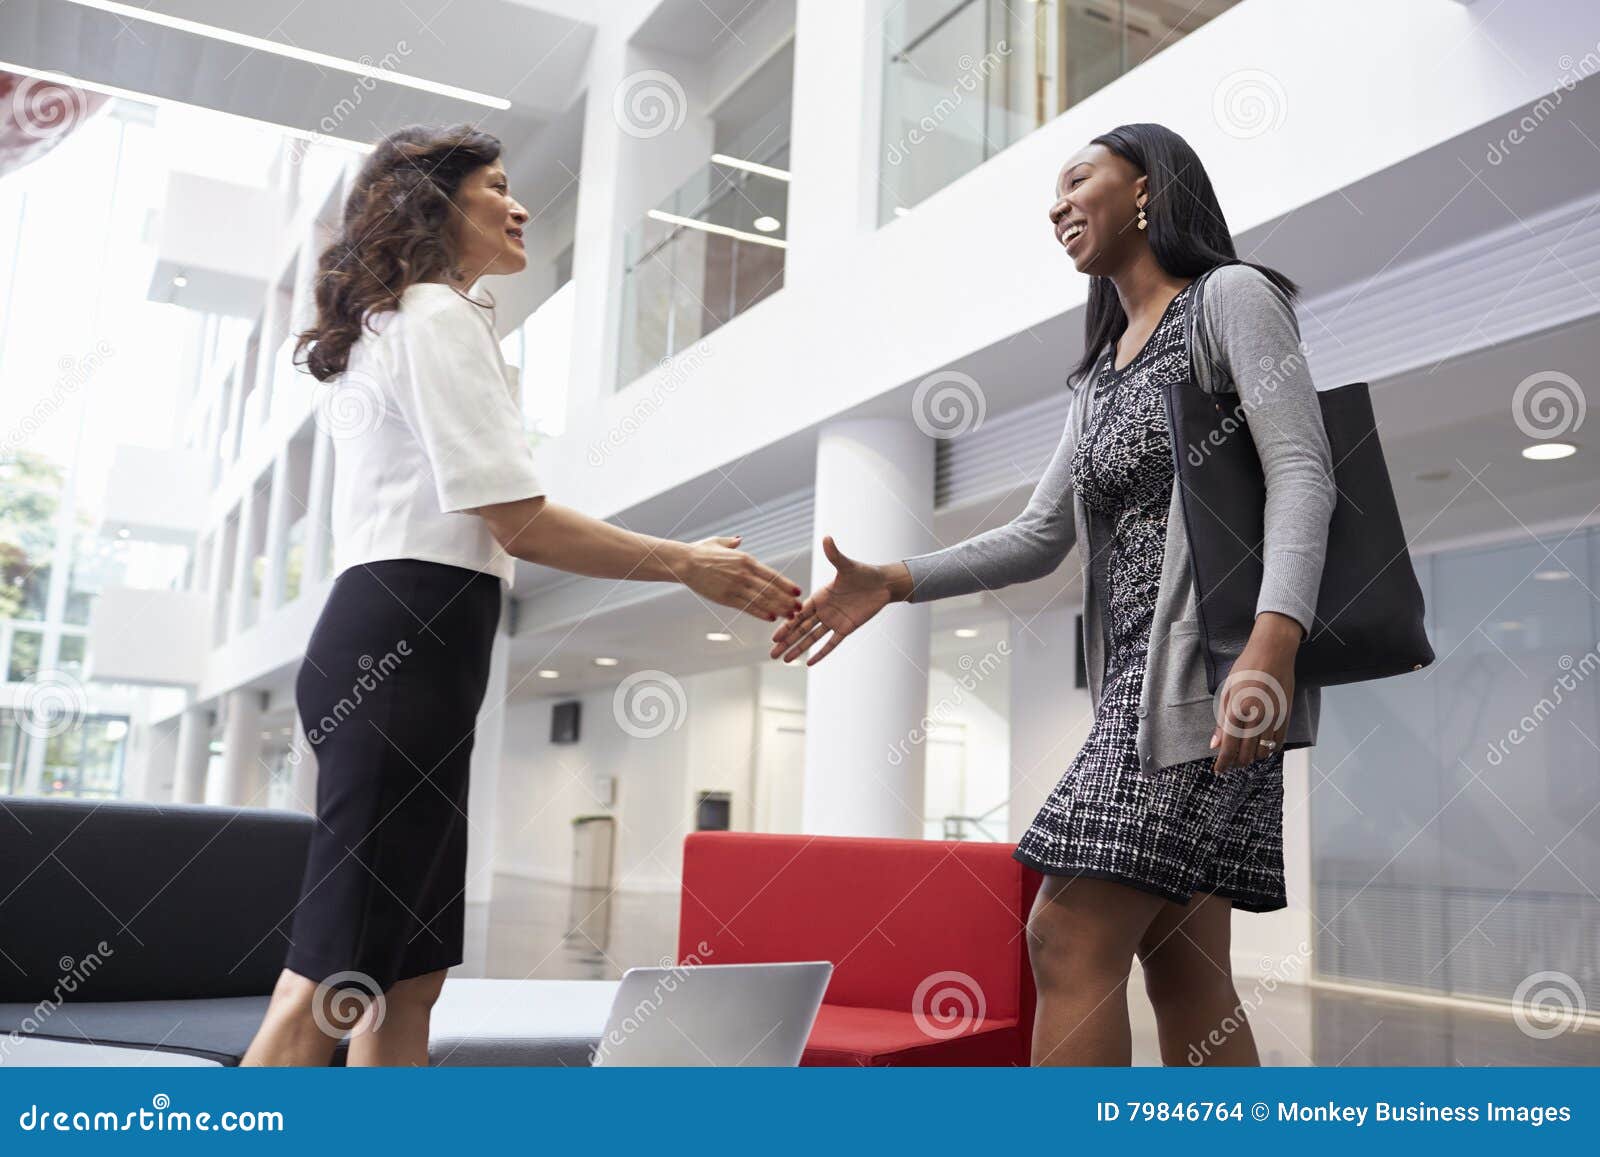 two businesswomen shaking hands in lobby of modern office